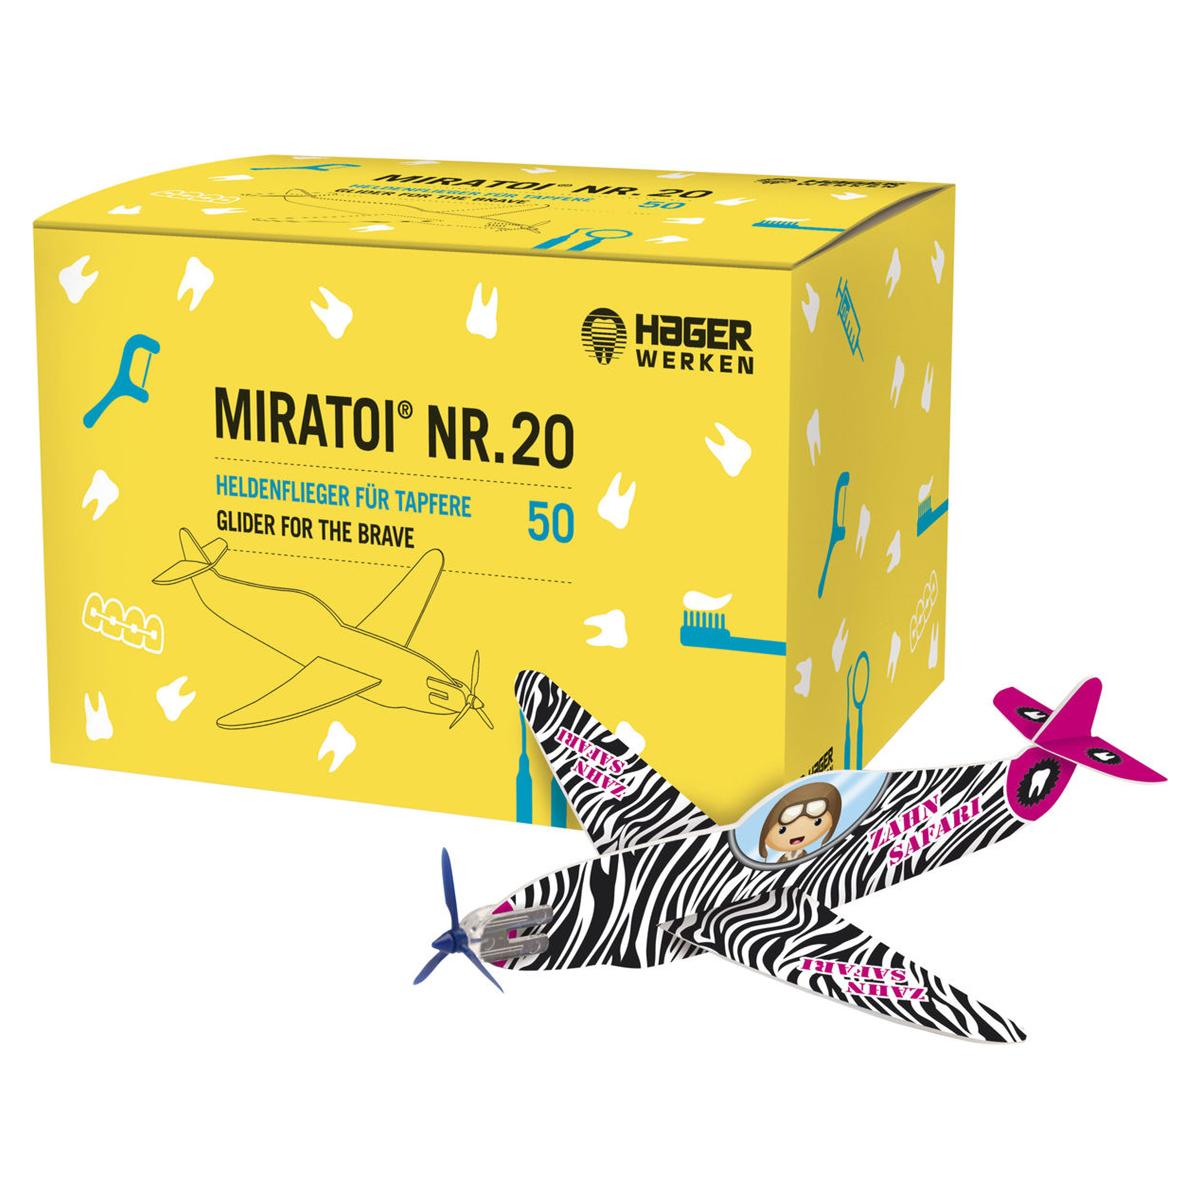 Miratoi® Nr. 20 - Flugzeuge - Packung 50 Stück